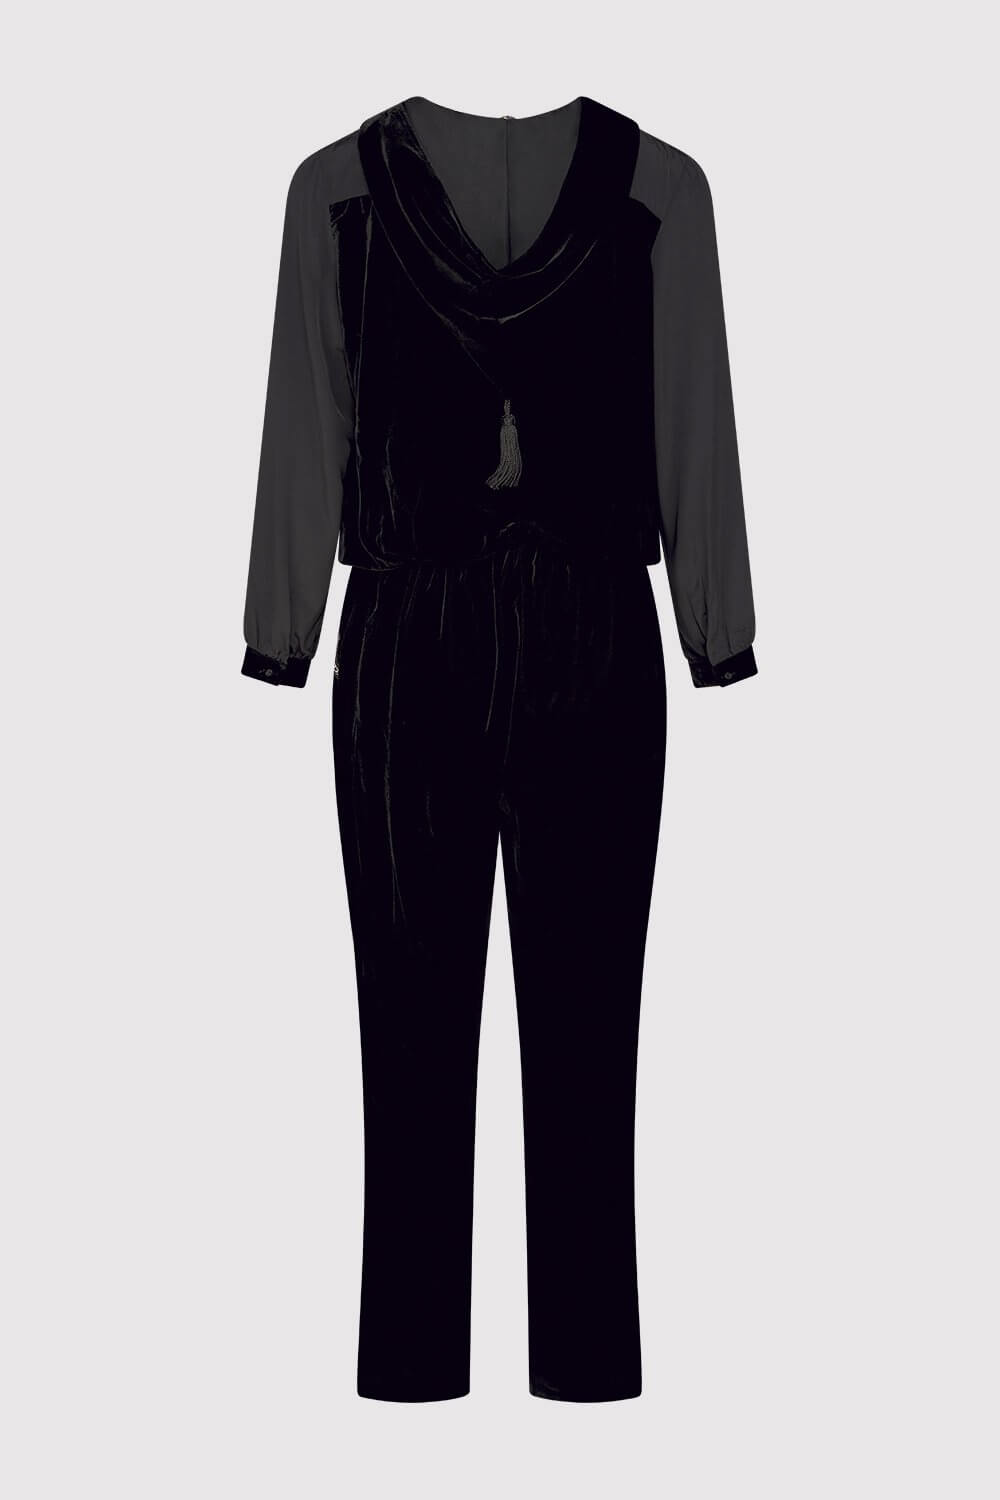 Malaury Long Sleeve Jumpsuit in Black